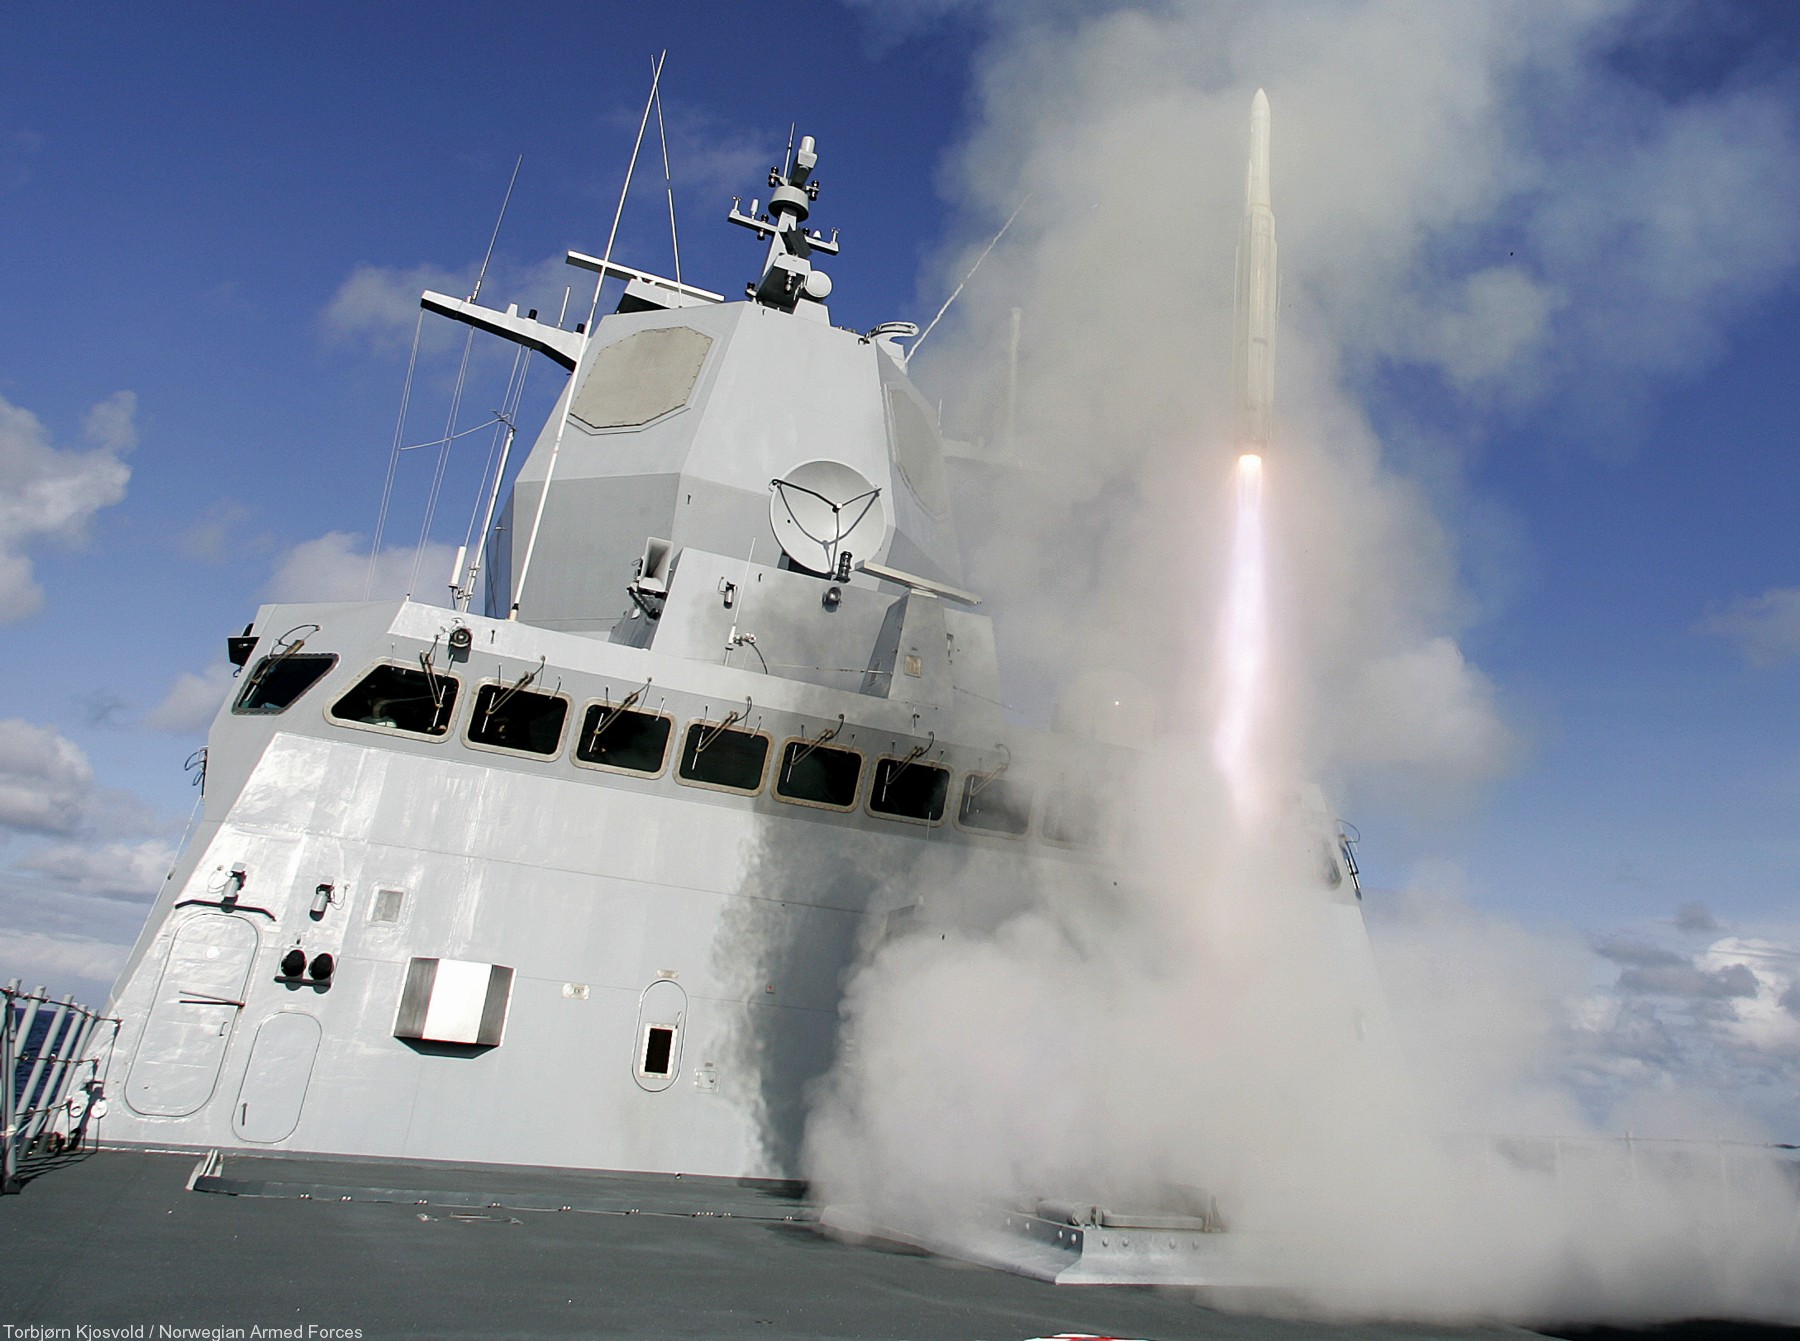 fridtjof nansen class frigate royal norwegian navy sjoforsvaret 75 rim-162 evolved sea sparrow missile essm mk-41 vls